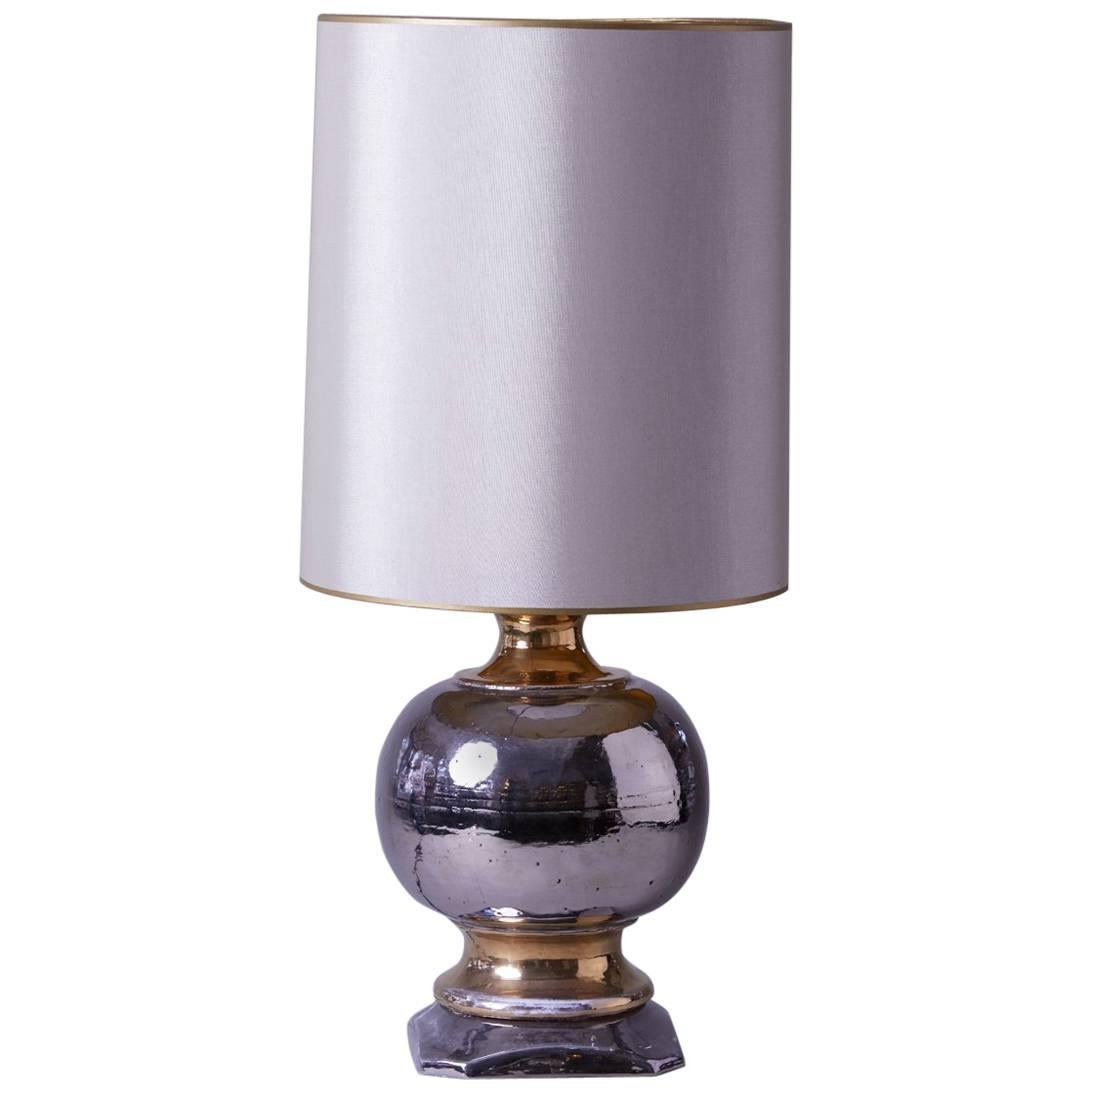 1950s Small-Scale Silver and Gold Table Lamp by Italian Designer Ugo Zaccagnini